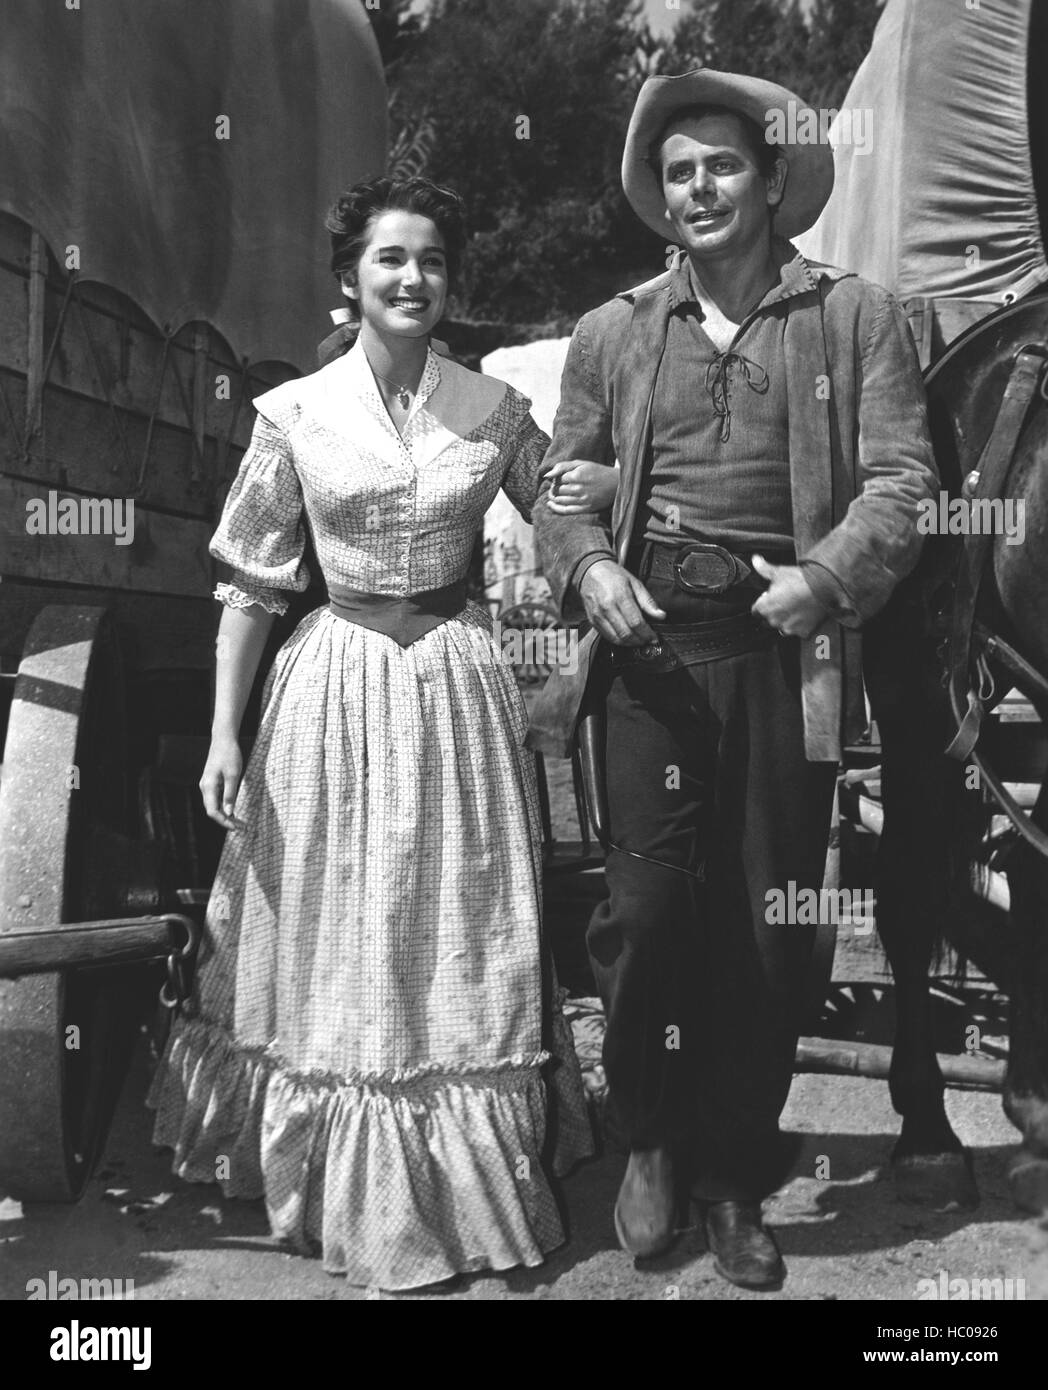 THE MAN FROM THE ALAMO, Julie Adams, Glenn Ford, 1953 Stock Photo - Alamy